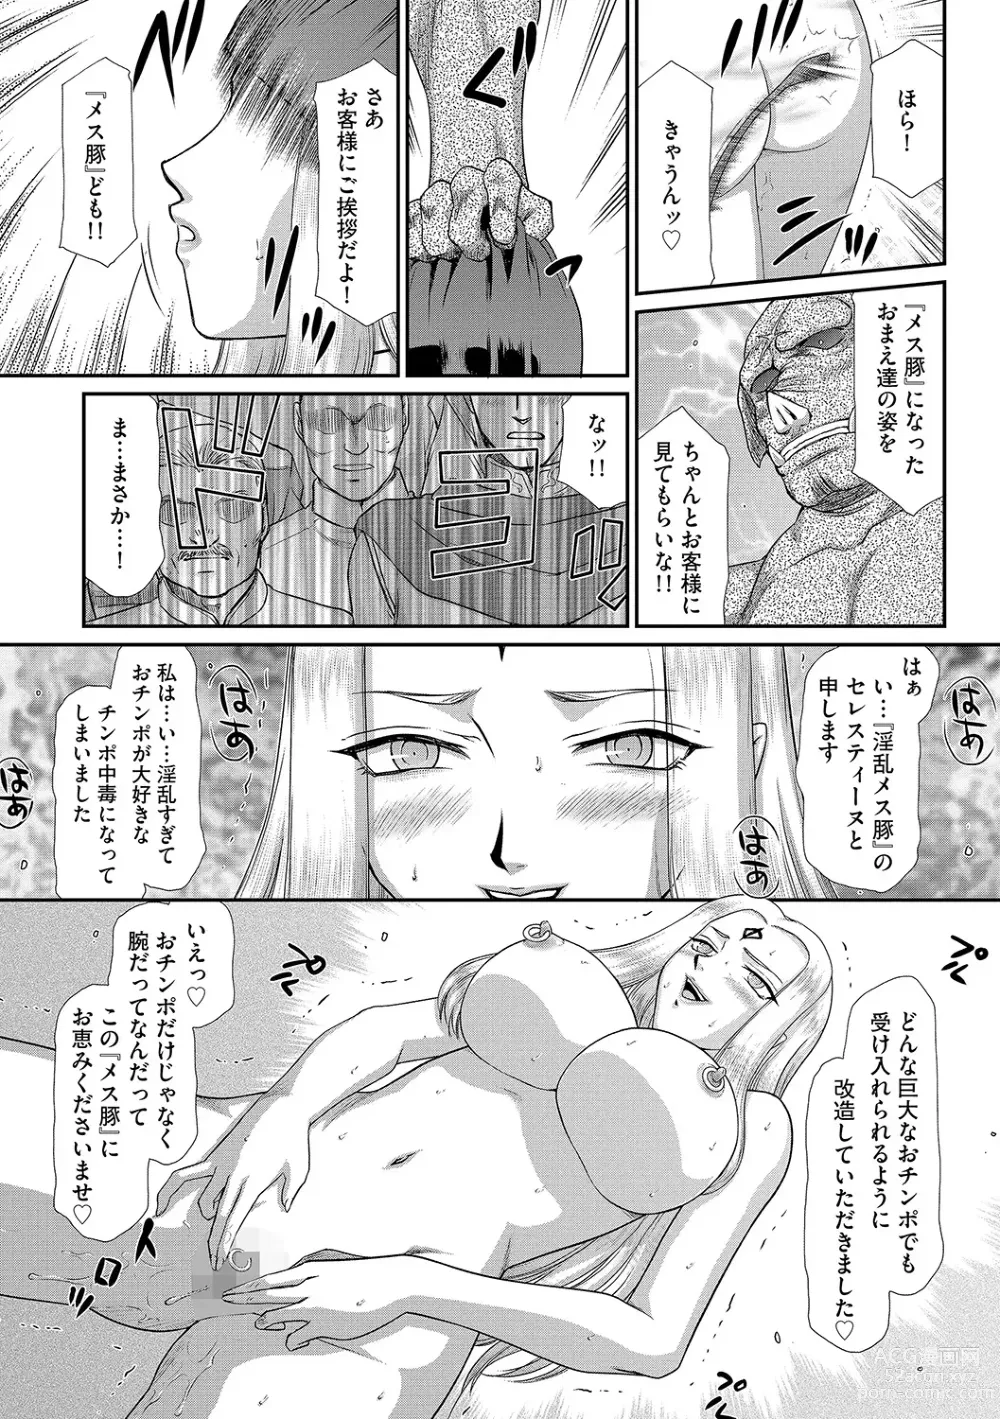 Page 183 of manga Hakudaku Senki Eleanor